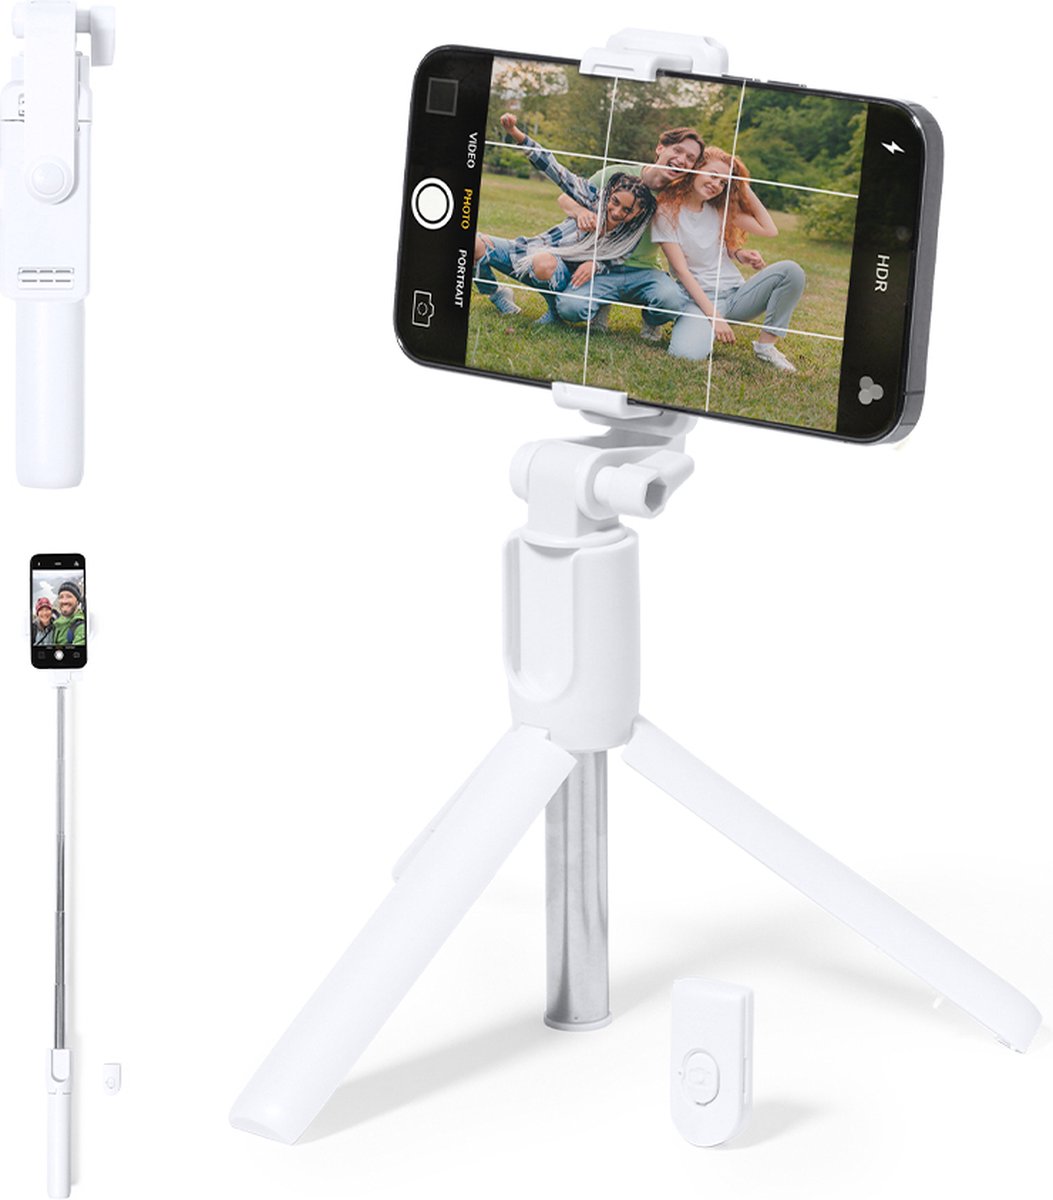 Tripod smartphone - Statief - Selfiestick - Fotografie accessoires - ABS - RVS - Wit